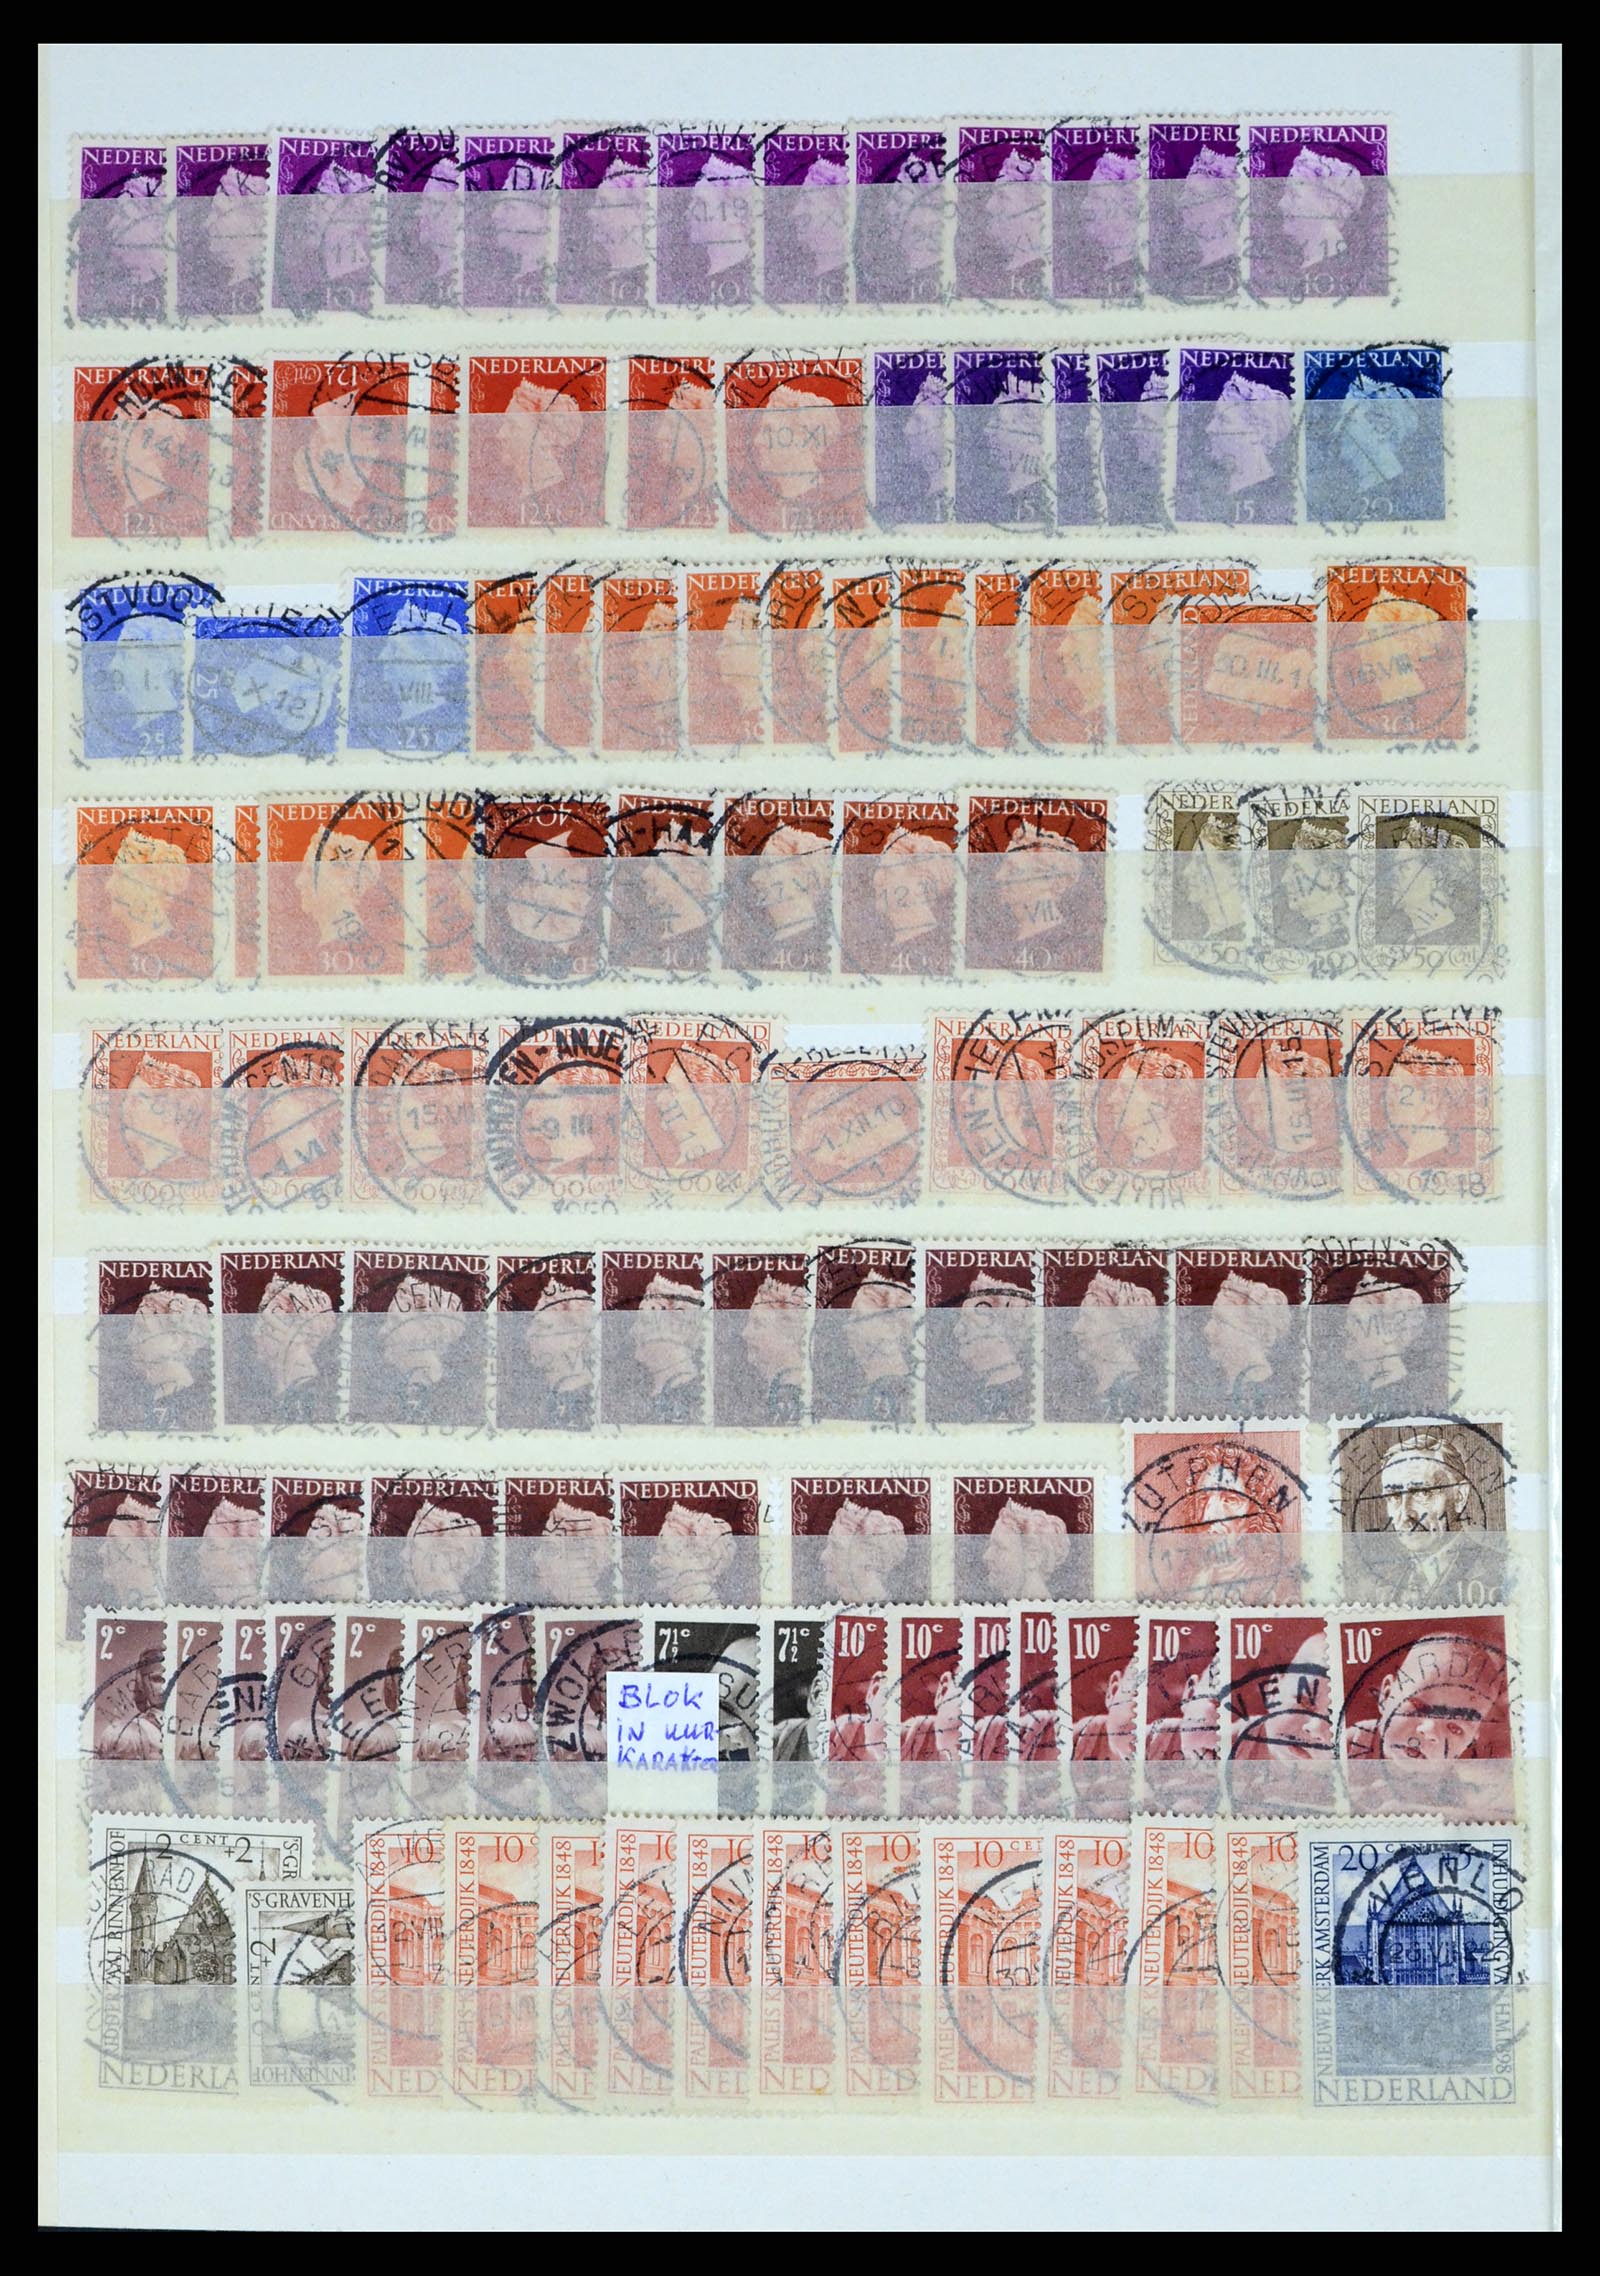 37424 044 - Stamp collection 37424 Netherlands shortbar cancels.